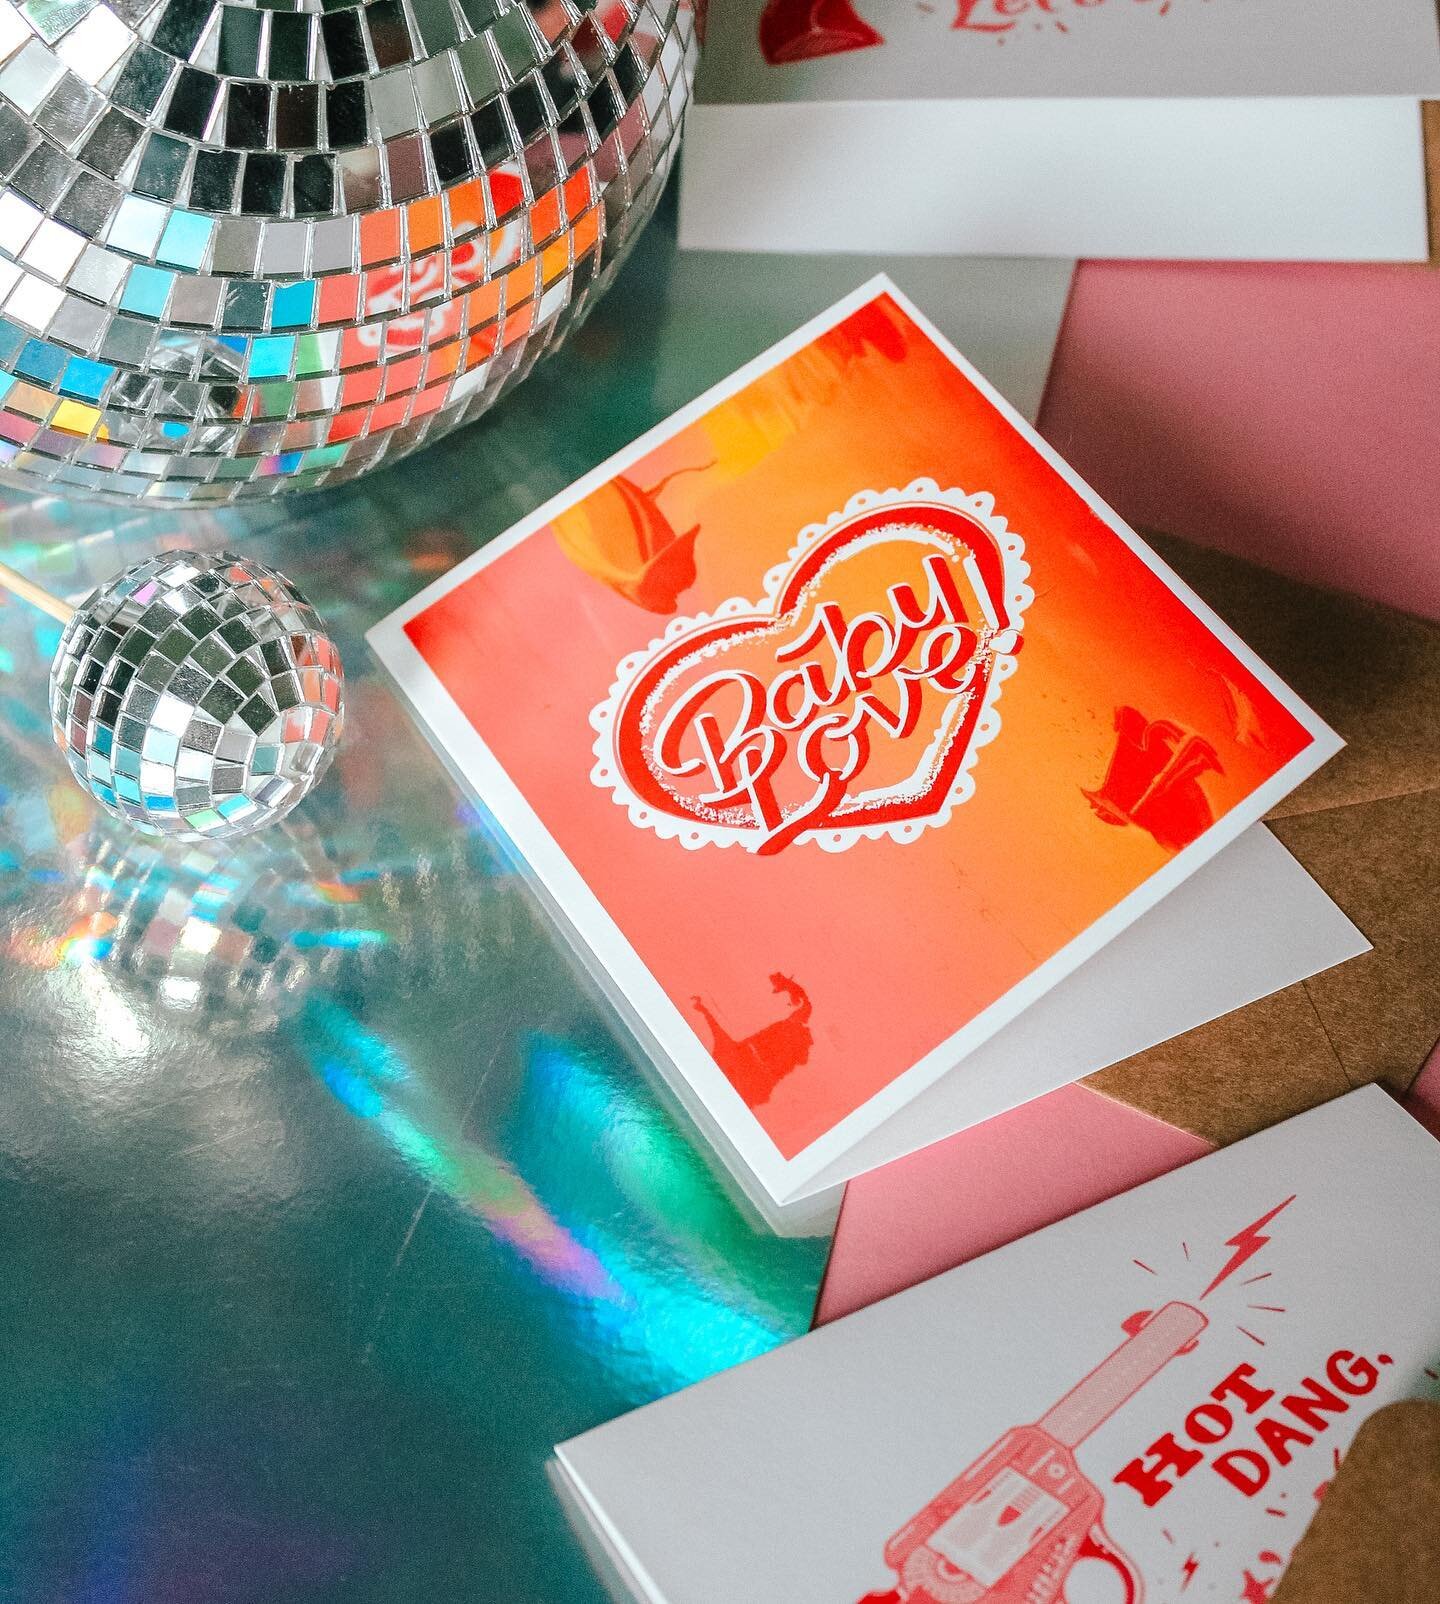 let&rsquo;s send more love letters 🐌📭😚❤️&zwj;🔥💌✨

#valentine #lovenotes #snailmailrevolution #loveletters #handlettering #typography #goodtype #design #graphicdesign #illustration #screenprinting #stationery #printmaking #splitfountain #greeting